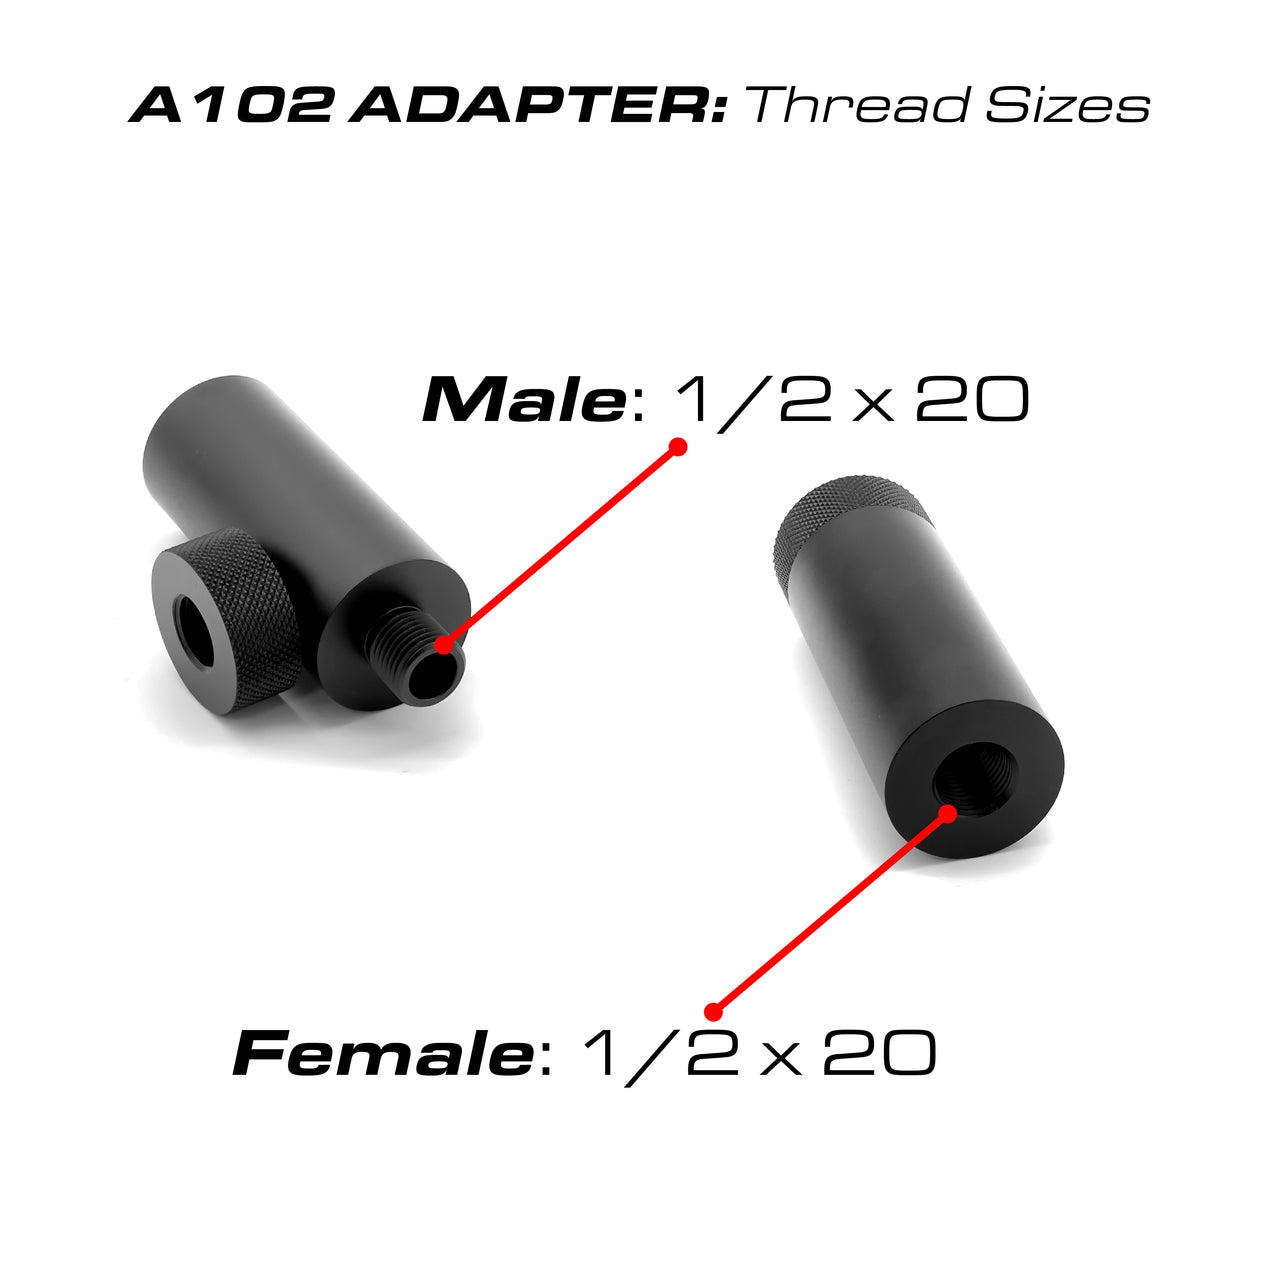 FX Shroud Extender 1/2 x 20 Female to 1/2 x 20 Male A102